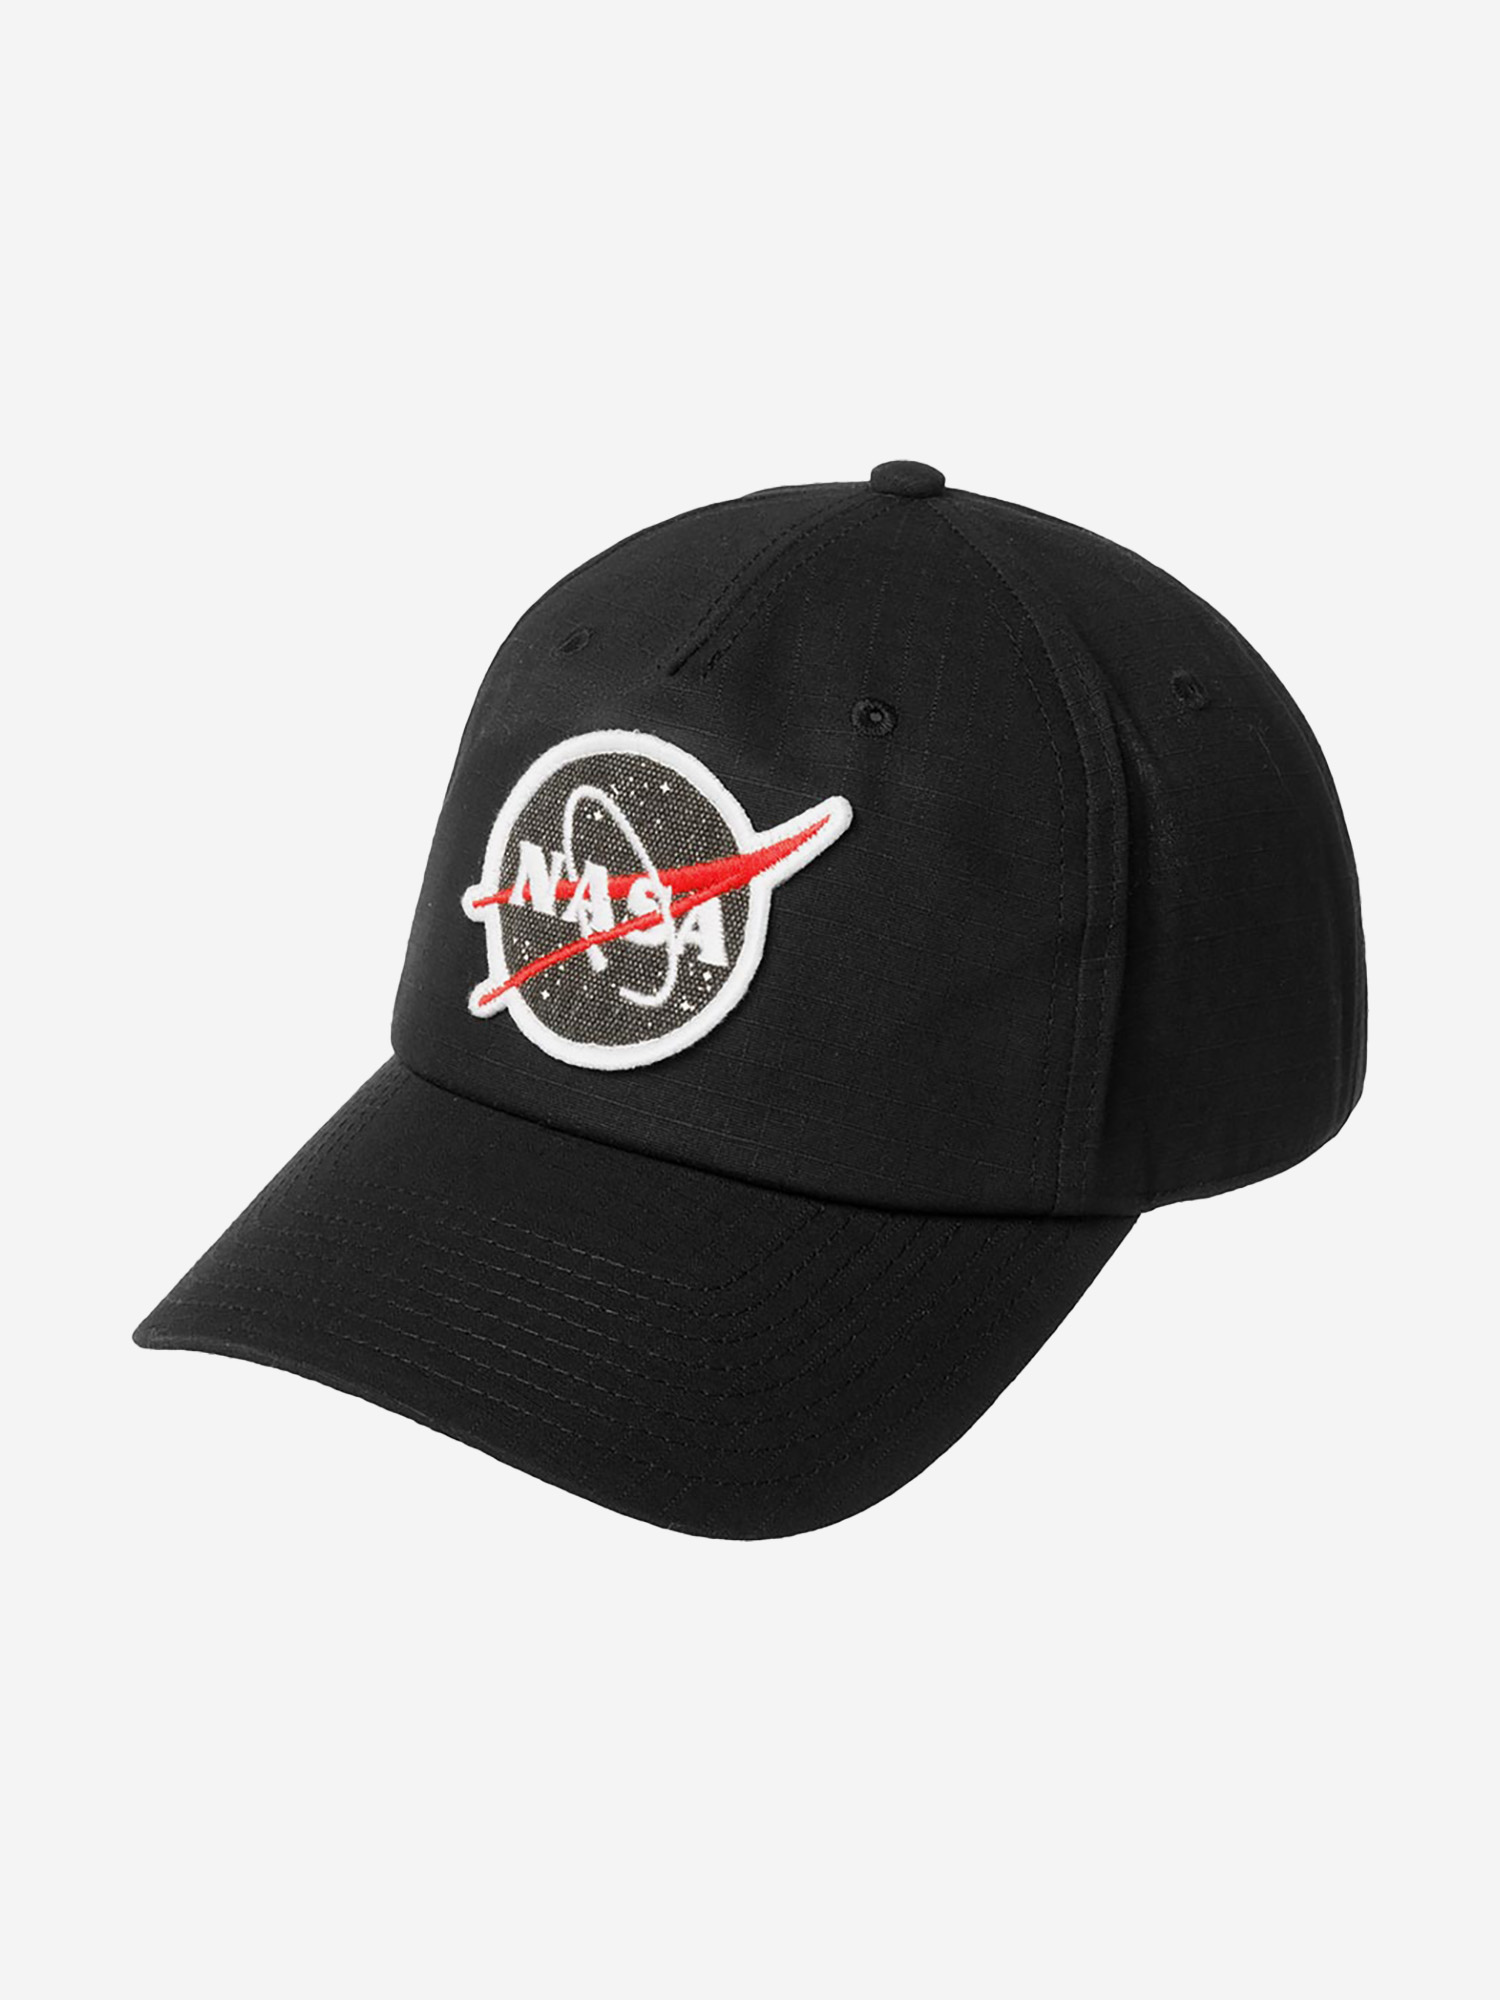 Бейсболка AMERICAN NEEDLE 45060A-NASA Space with NASA Surplus (черный), Черный бейсболка american needle 43870a nasa space with nasa